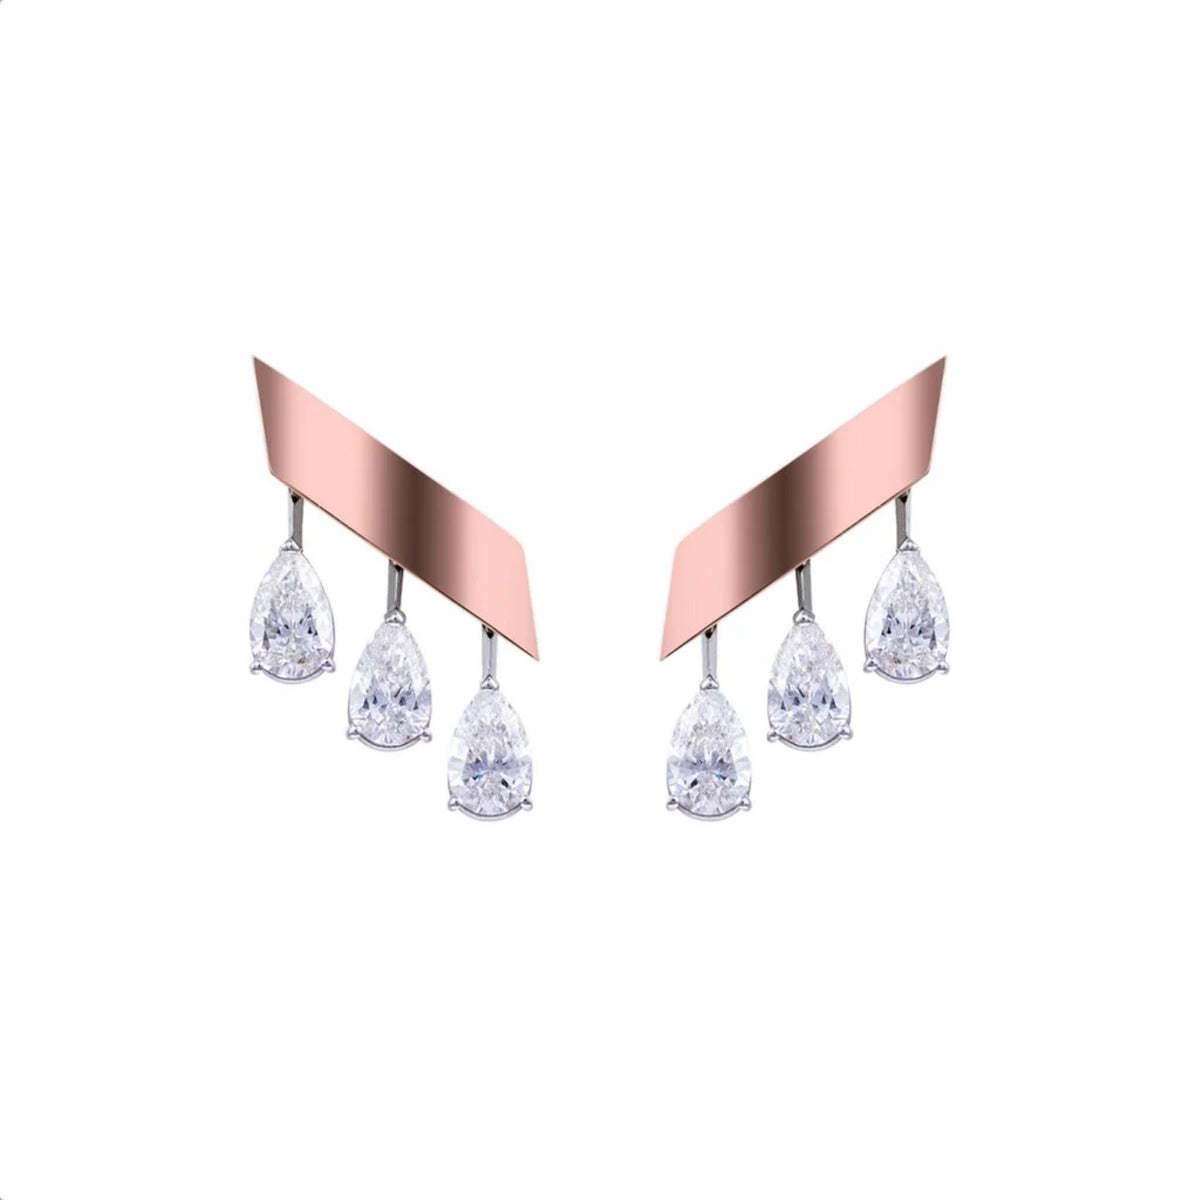 SIMPLICITY DIAMOND EARRINGS ROSE GOLD | Earring | 18K rose gold, diamonds, earring | ORLOV